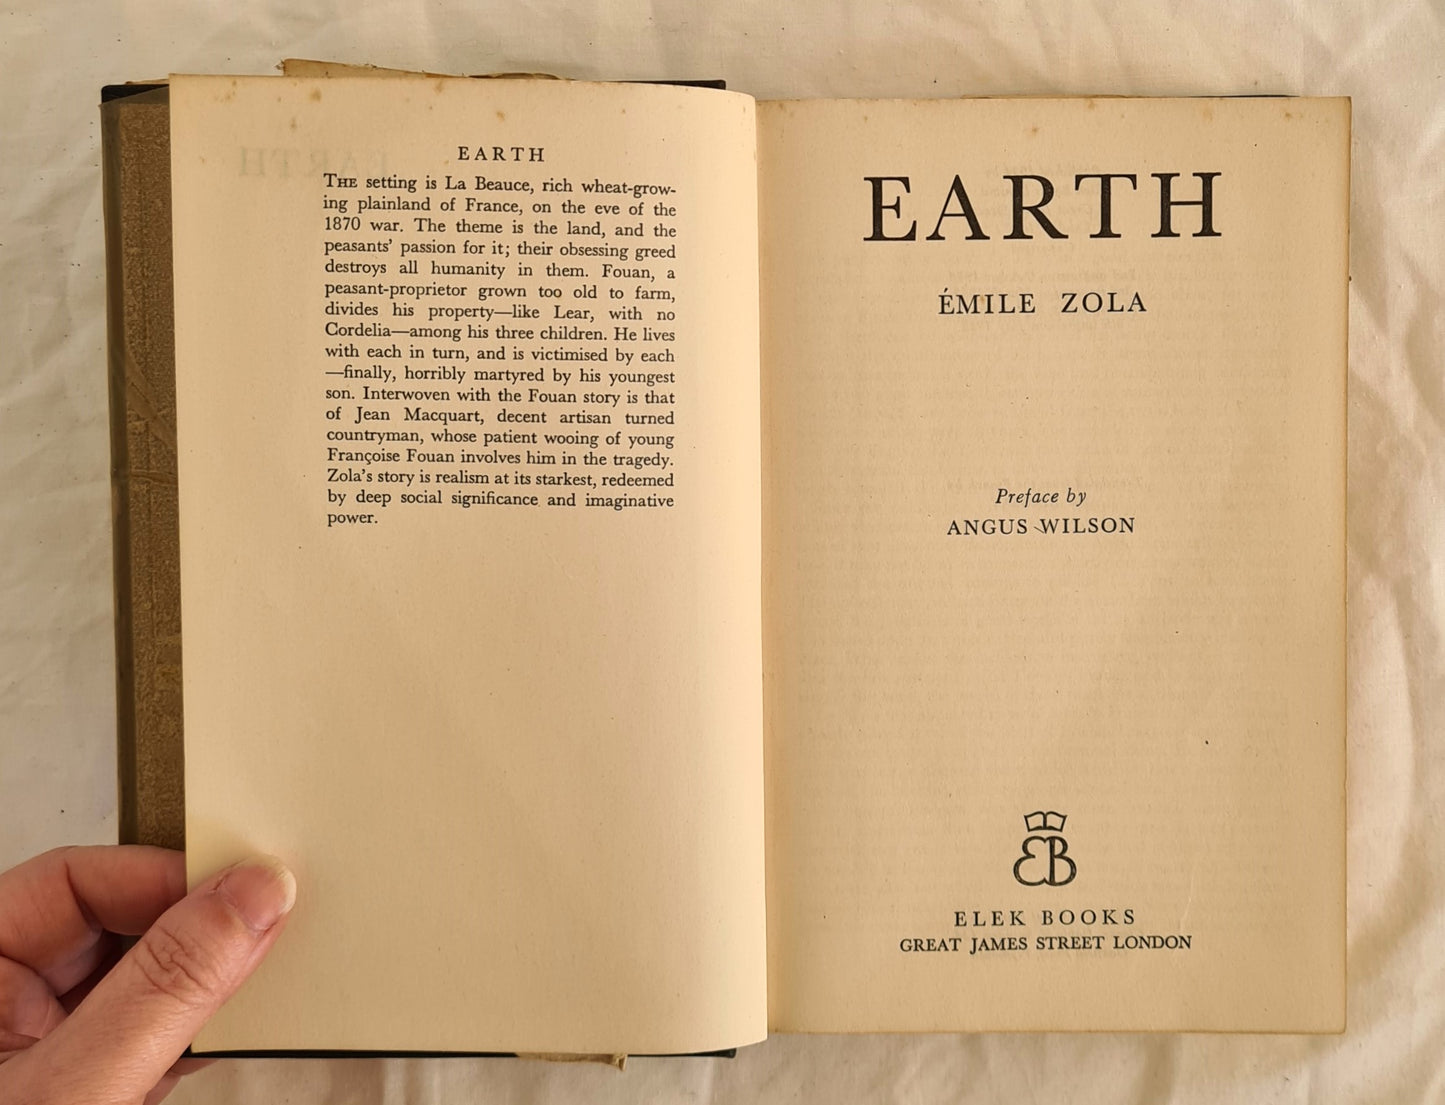 Earth by Emile Zola (jacket)